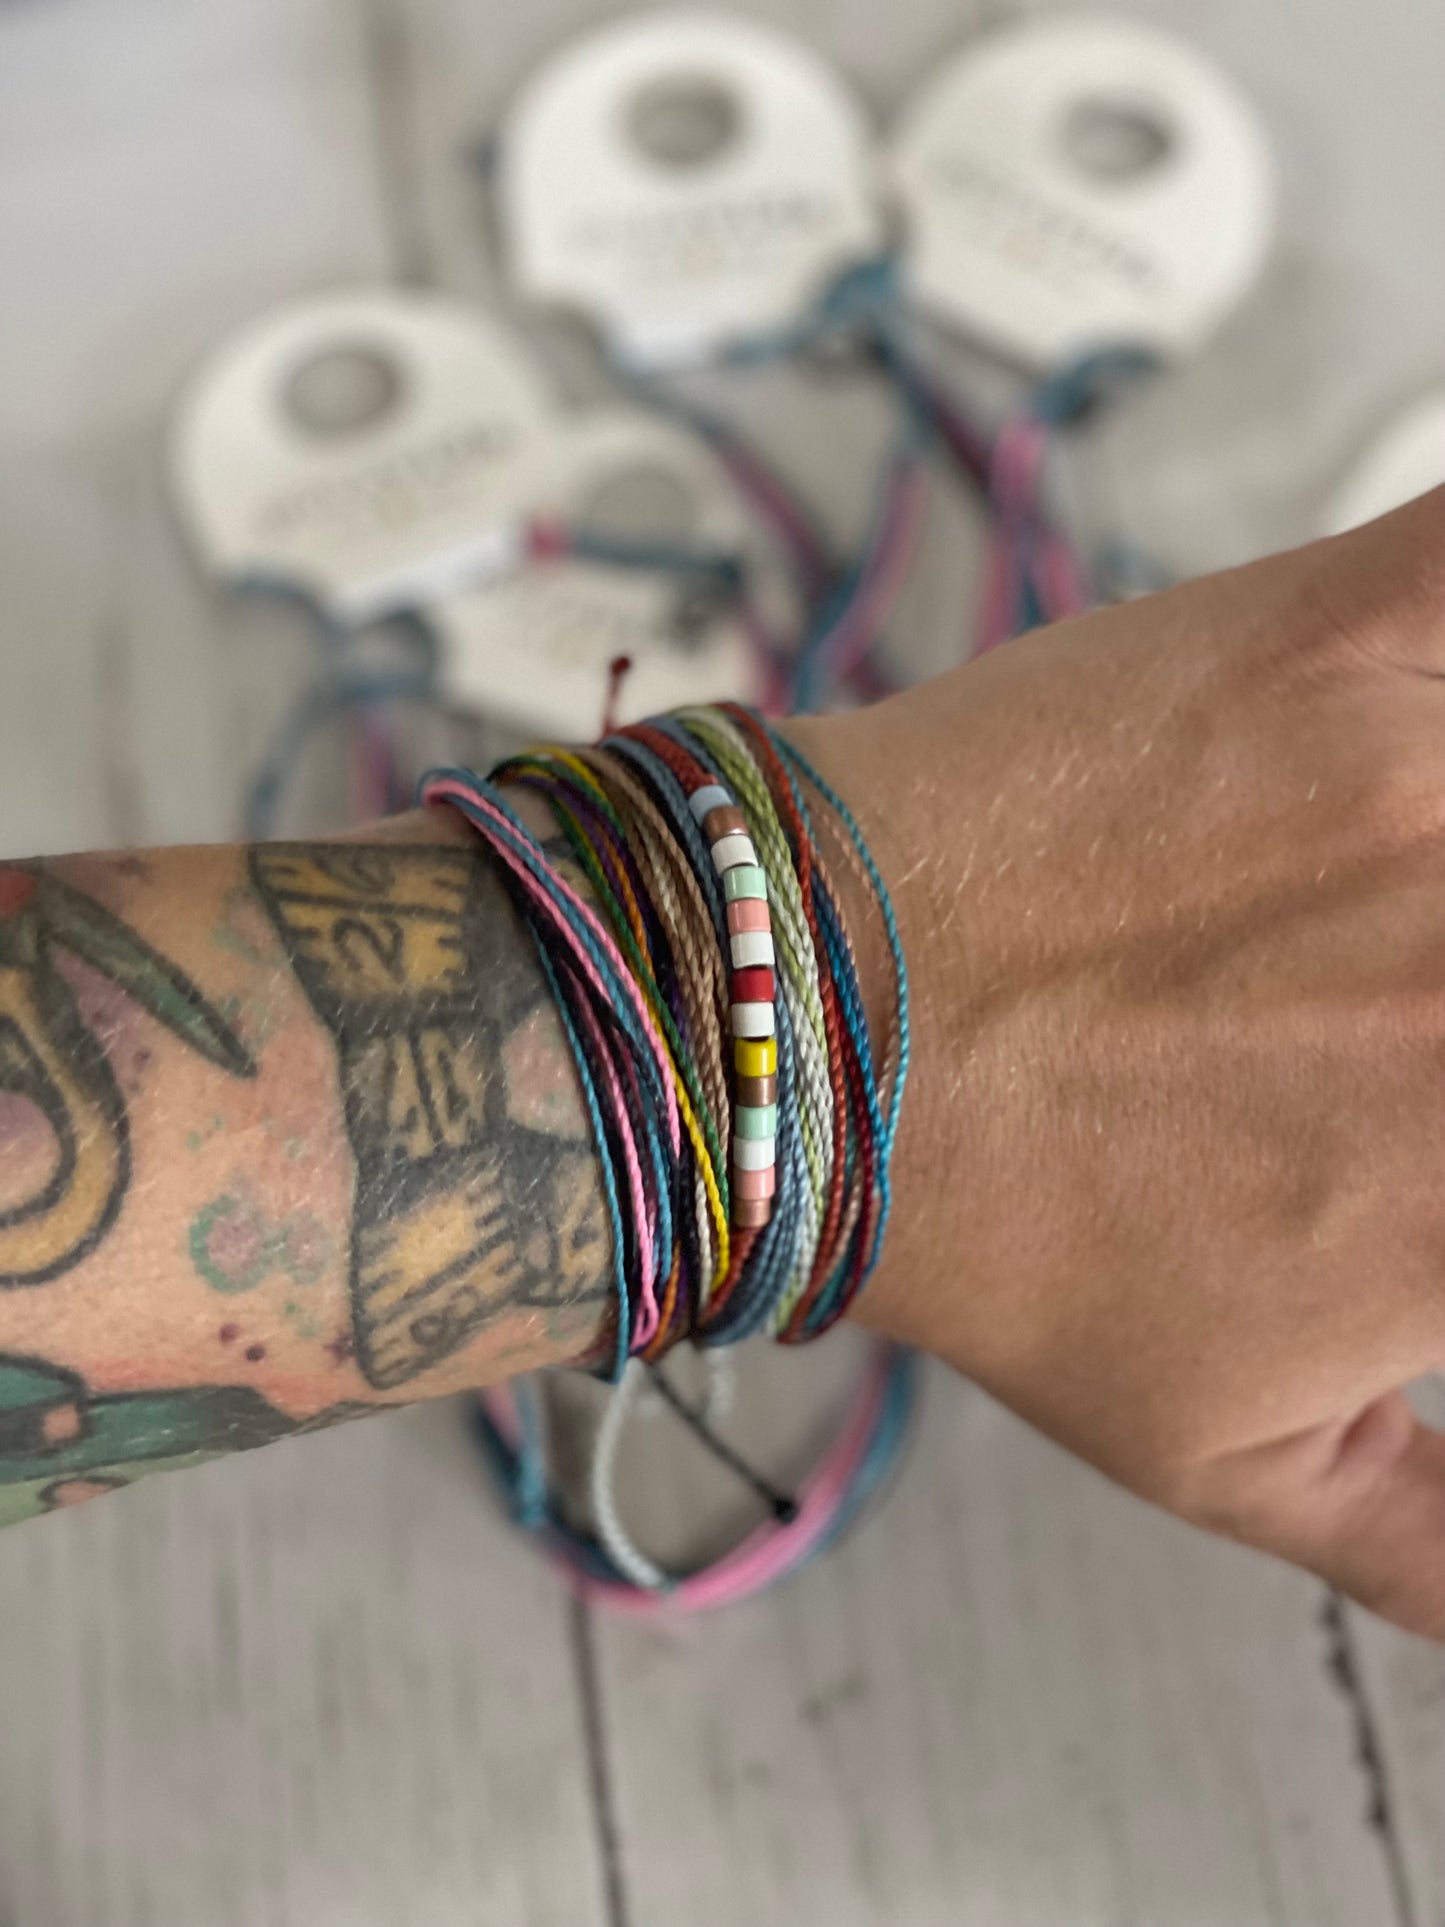 Exclusive RockerBye Pura Vida bracelets plus fundraiser donation retail swag